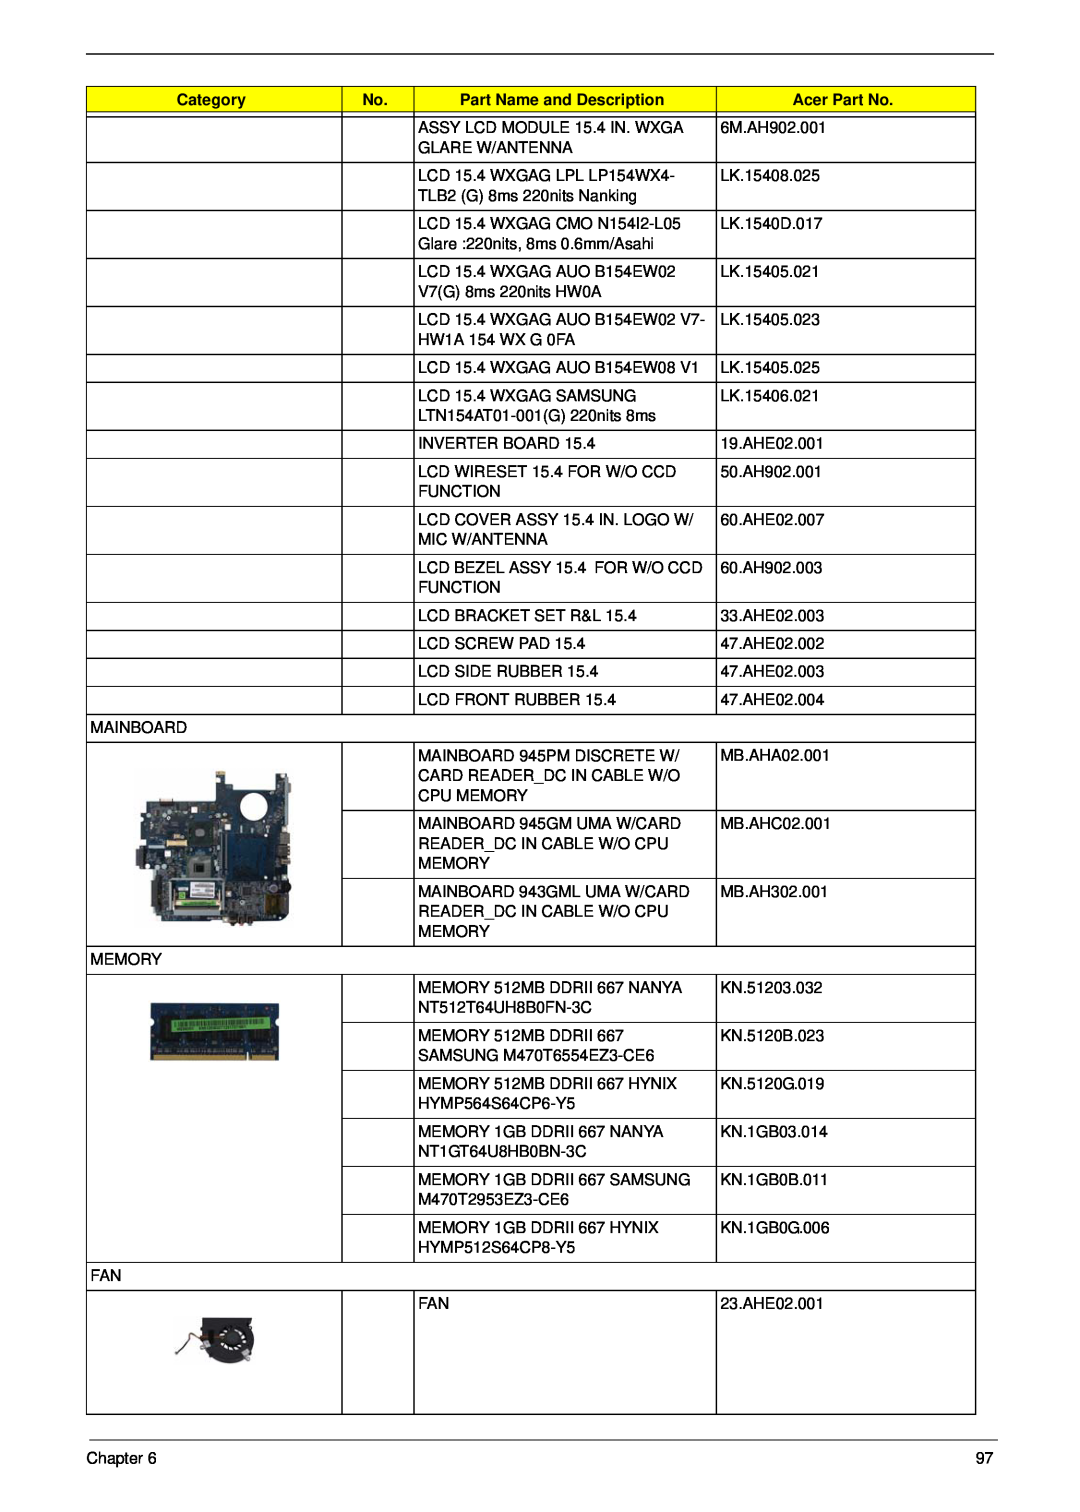 Acer 5710G, 5310G manual Category, Part Name and Description, Acer Part No 